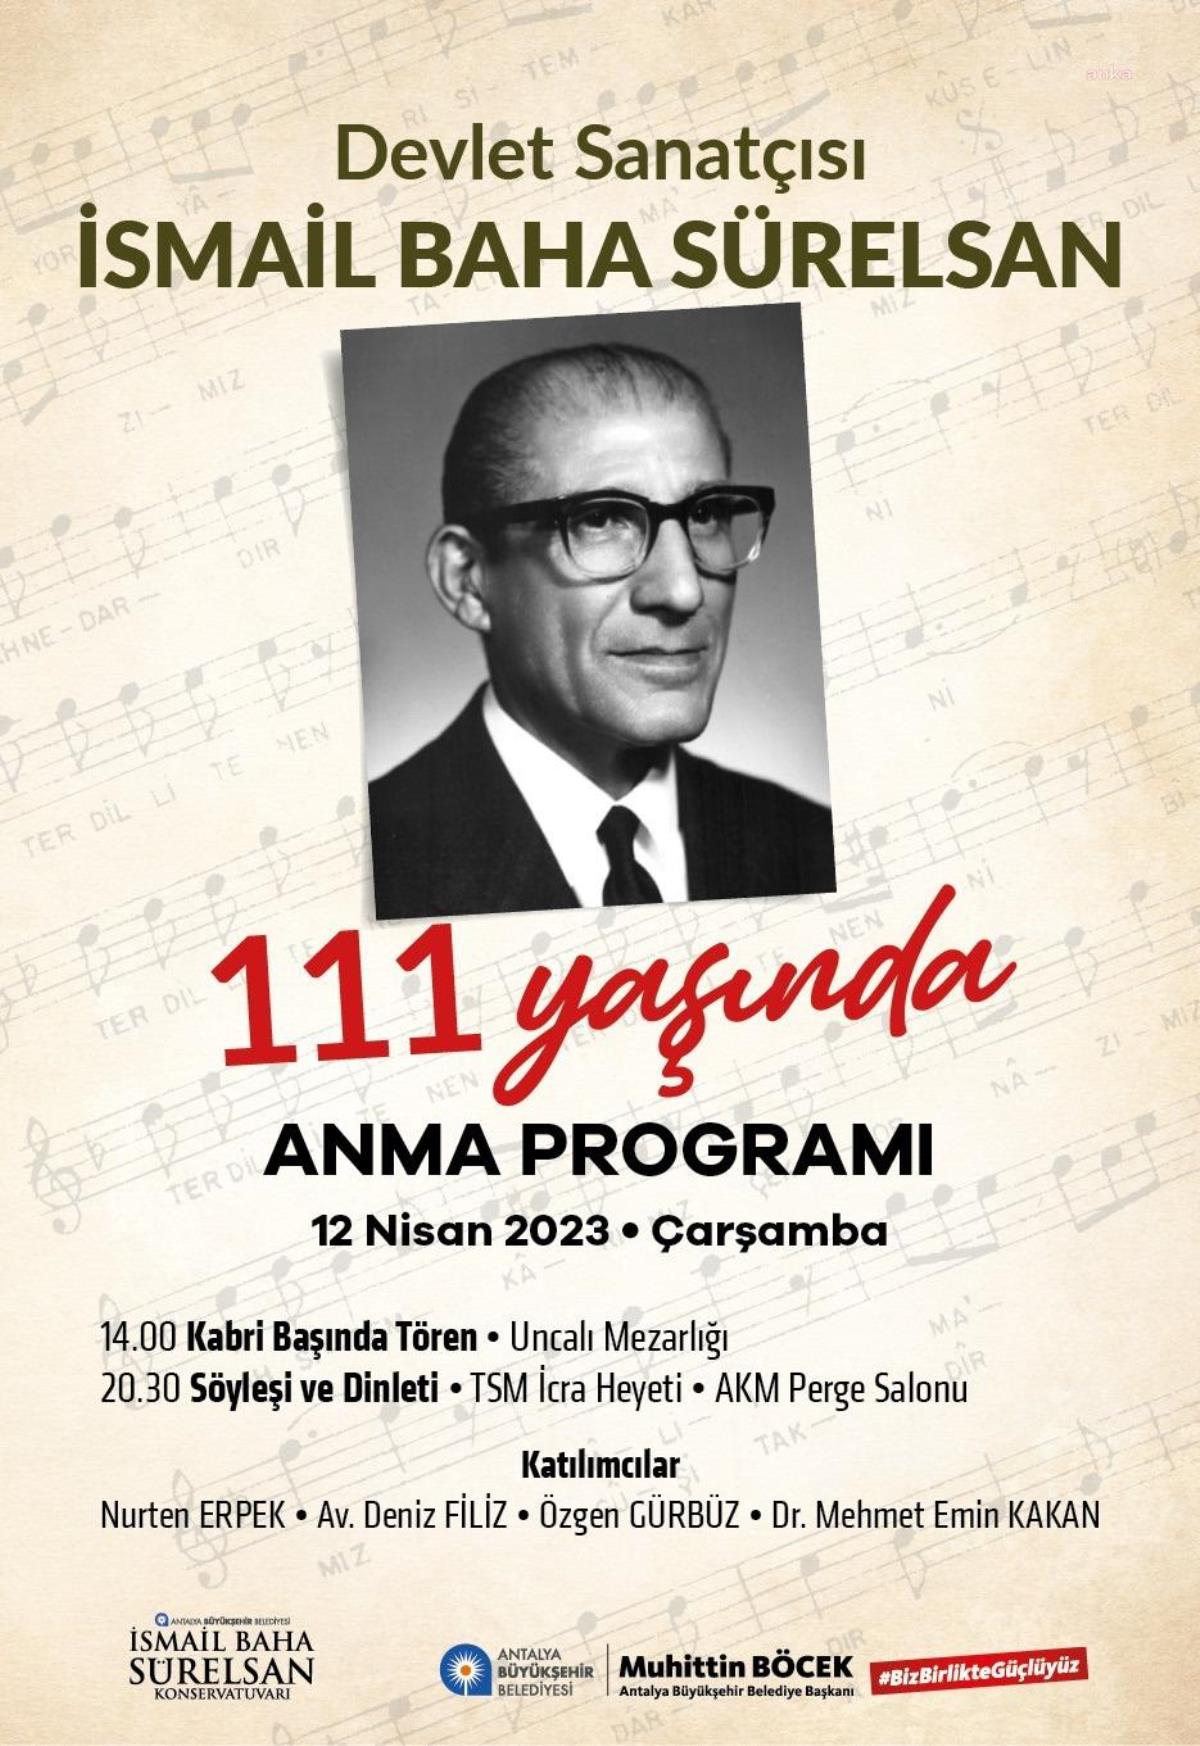 İsmail Baha Sürelsan, Antalya'da Anılacak